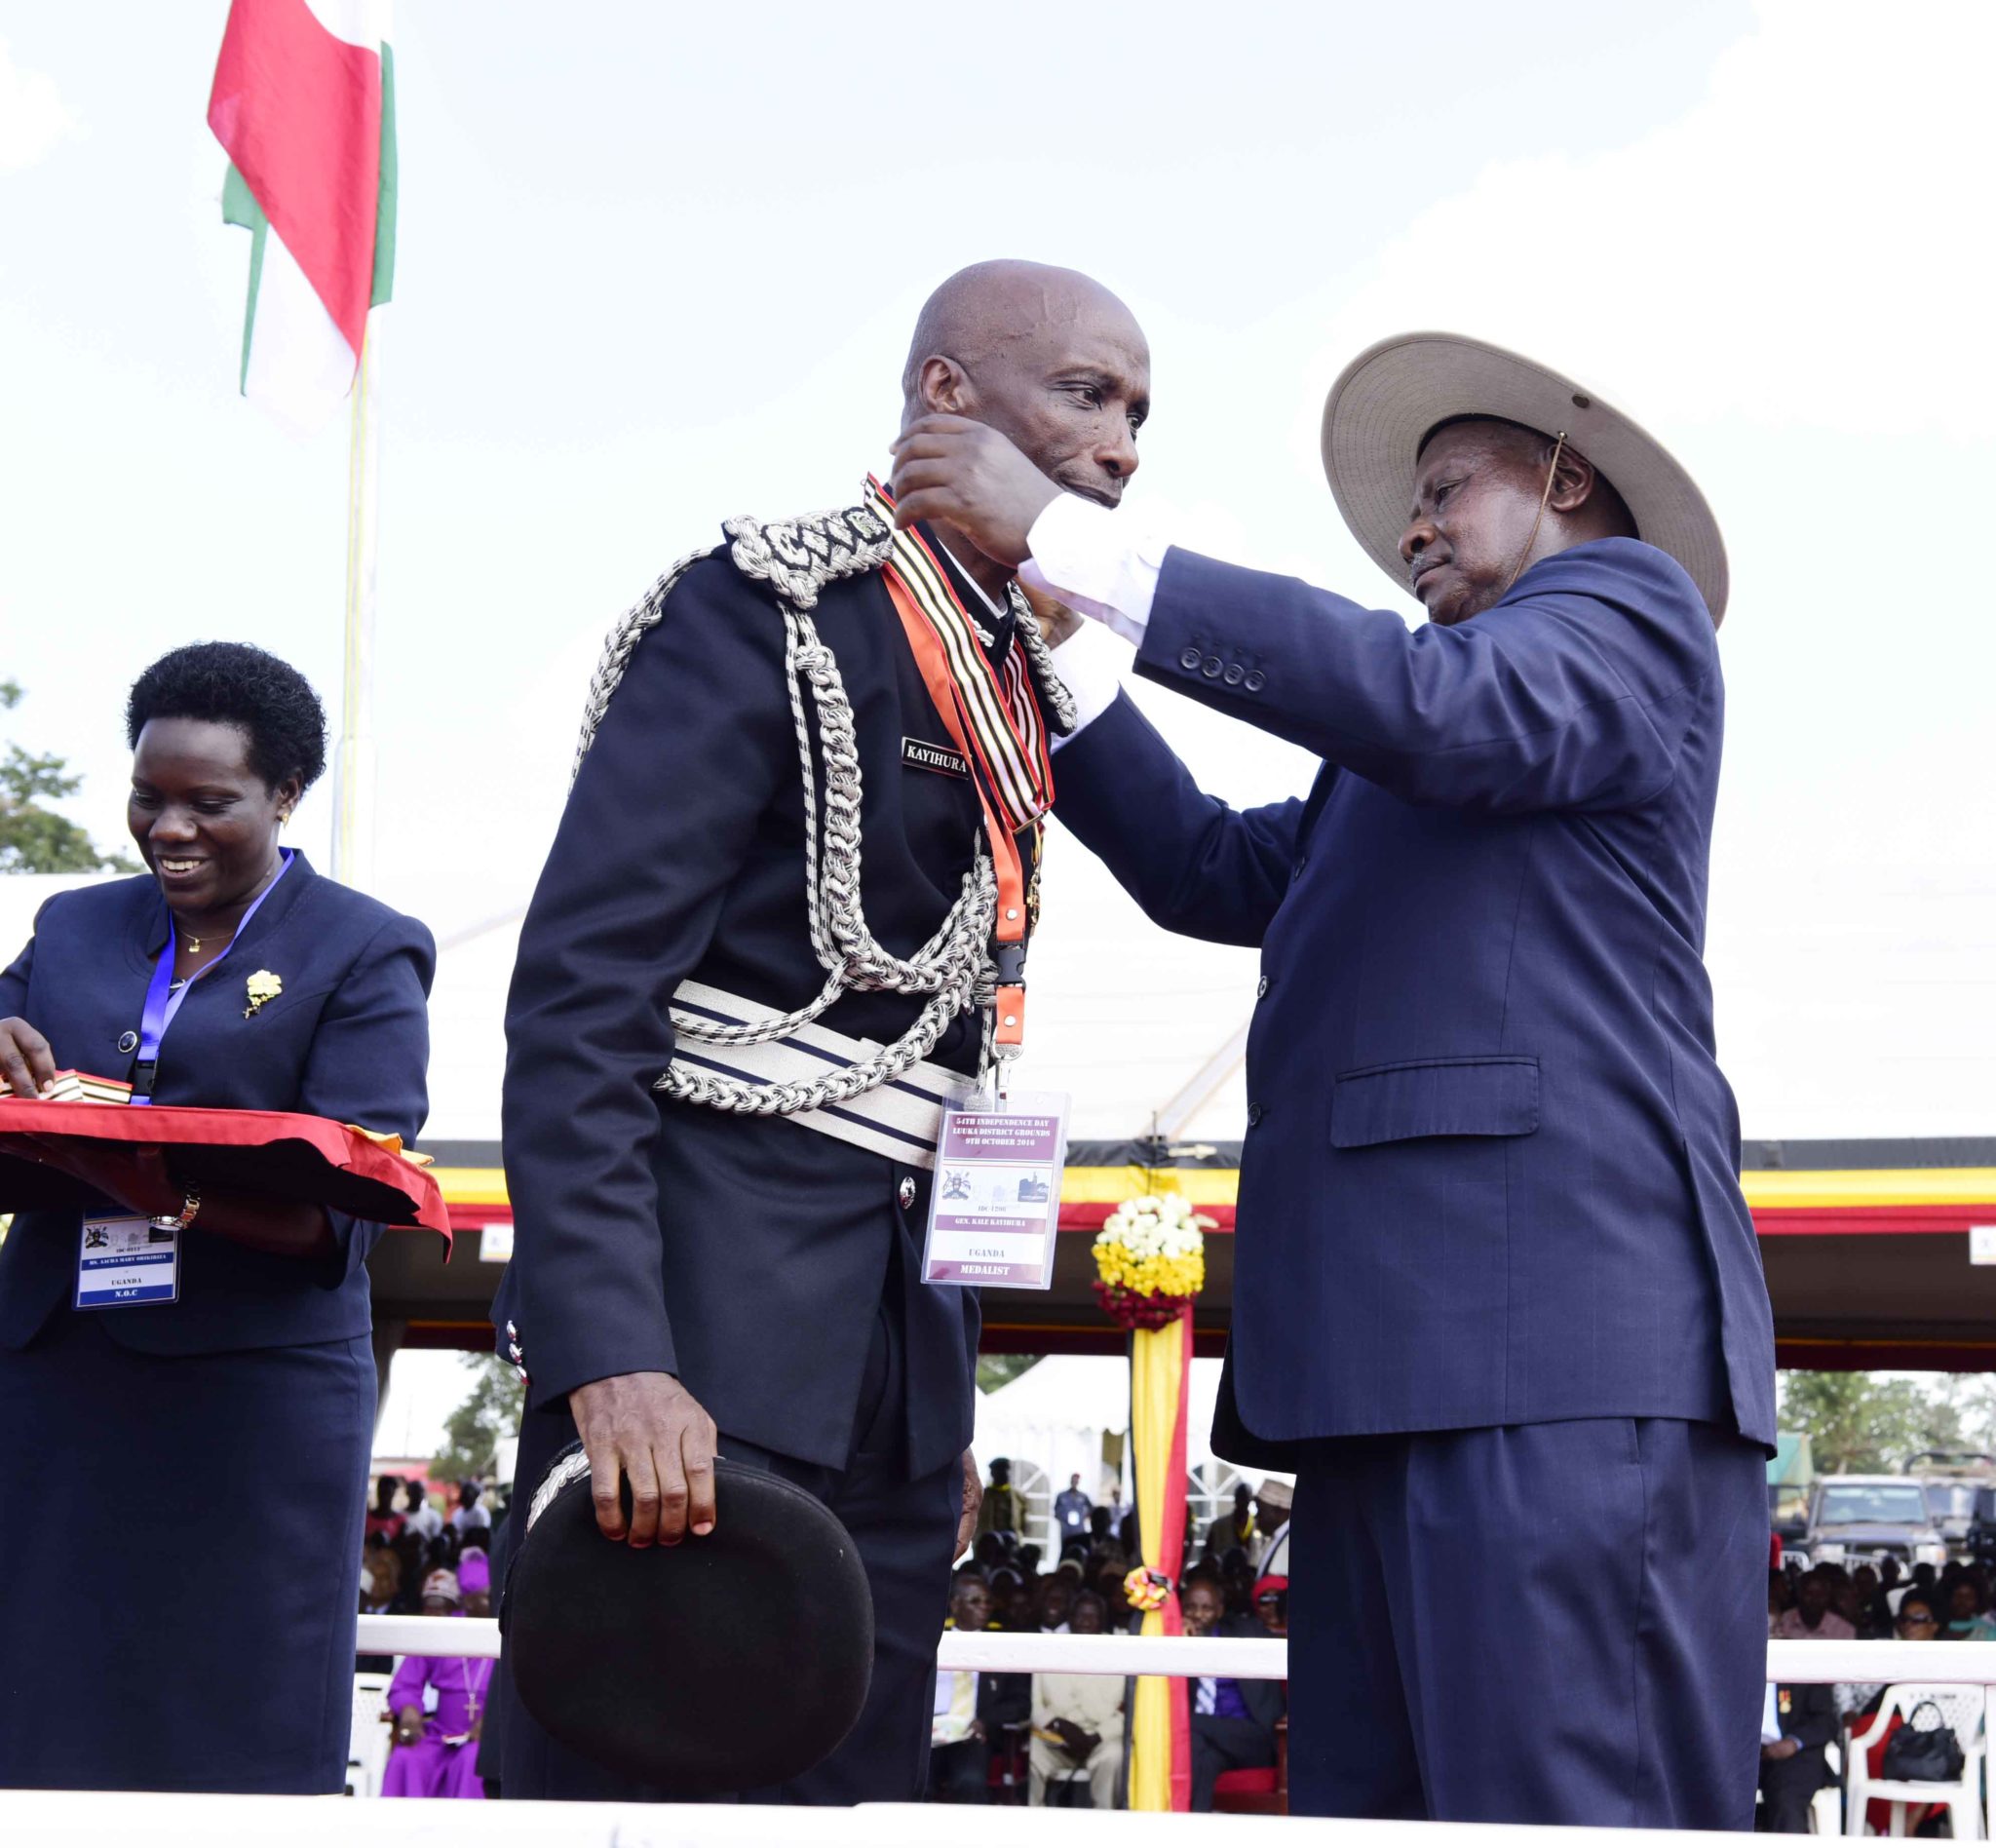 Preisent Yoweri Museveni decorates the Inspector General of Police General Kale Kayihura